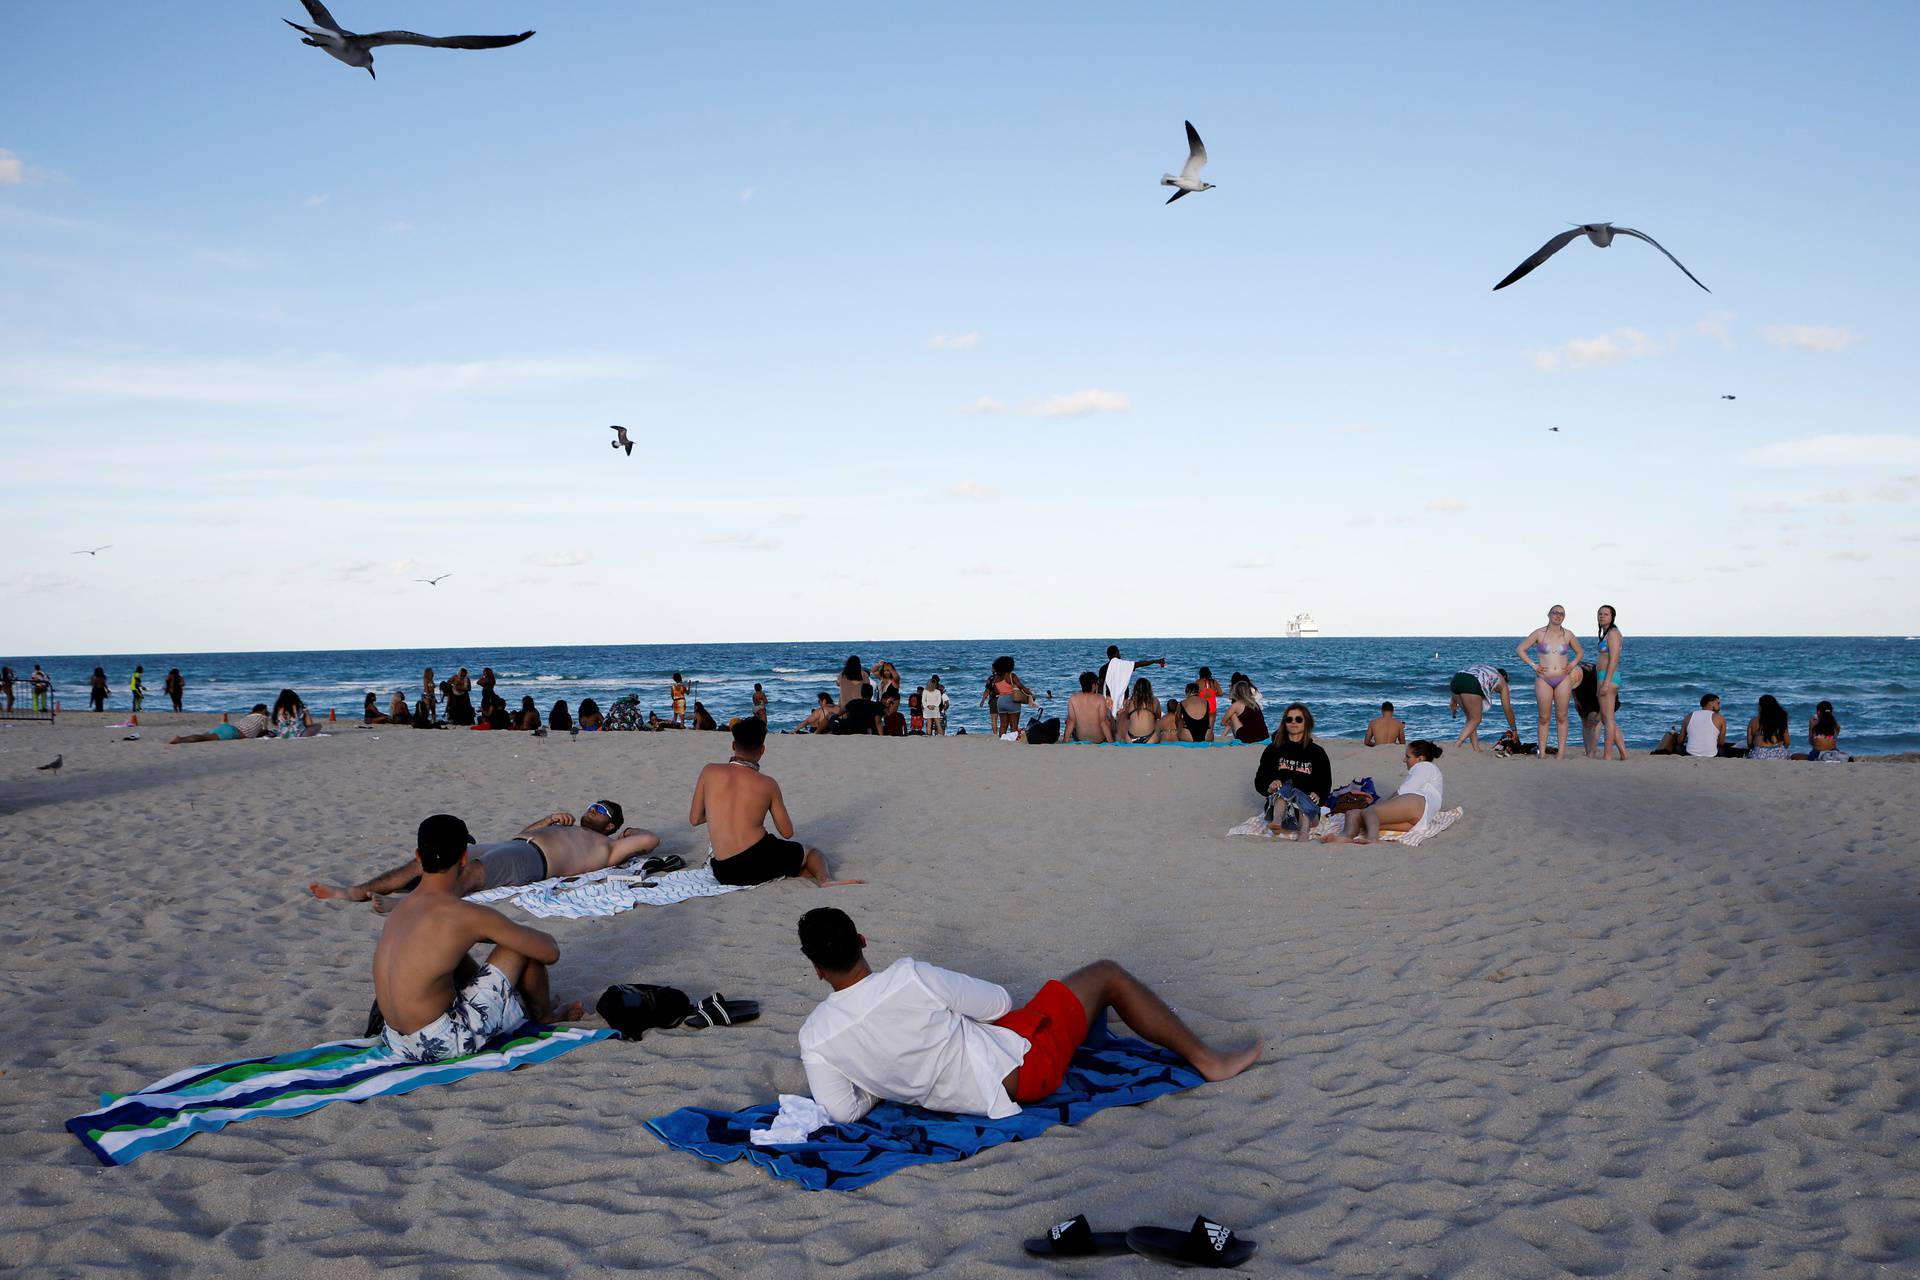 Despite COVID risks, spring breakers flock to South Florida